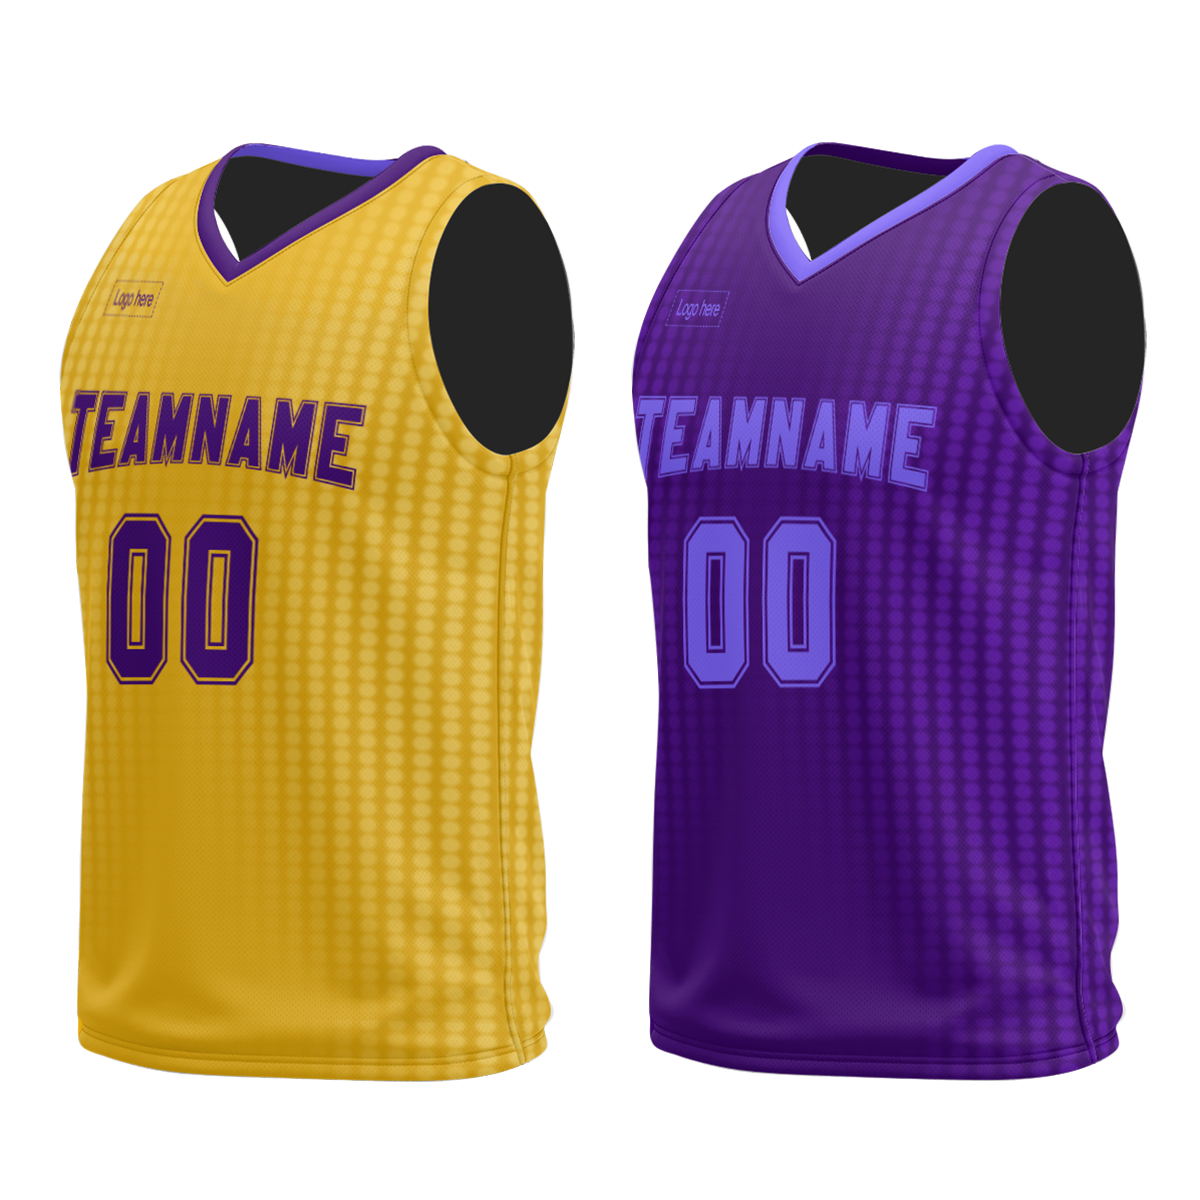 oem-service-custom-cool-design-new-style-basketball-jerseys-quick-dry-basketball-uniforms-at-cj-pod-5